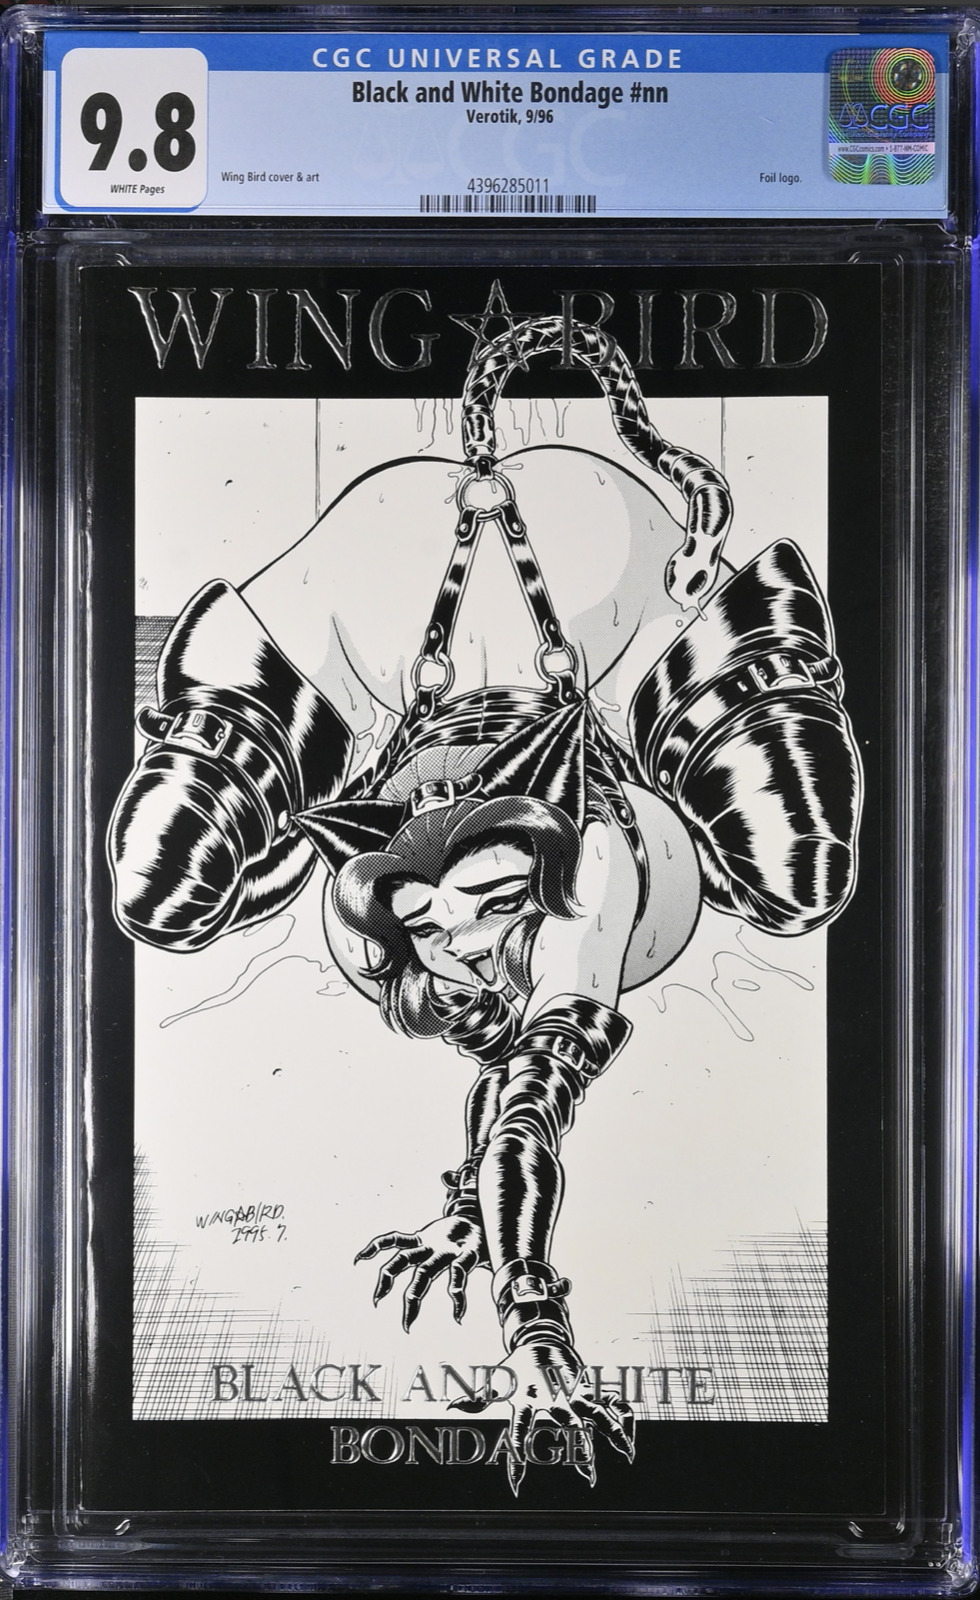 WINGBIRD B&W BONDAGE #1 CGC 9.8 GRADED 1996 VEROTIK SILVER EMBOSSED COVER 1 of 1